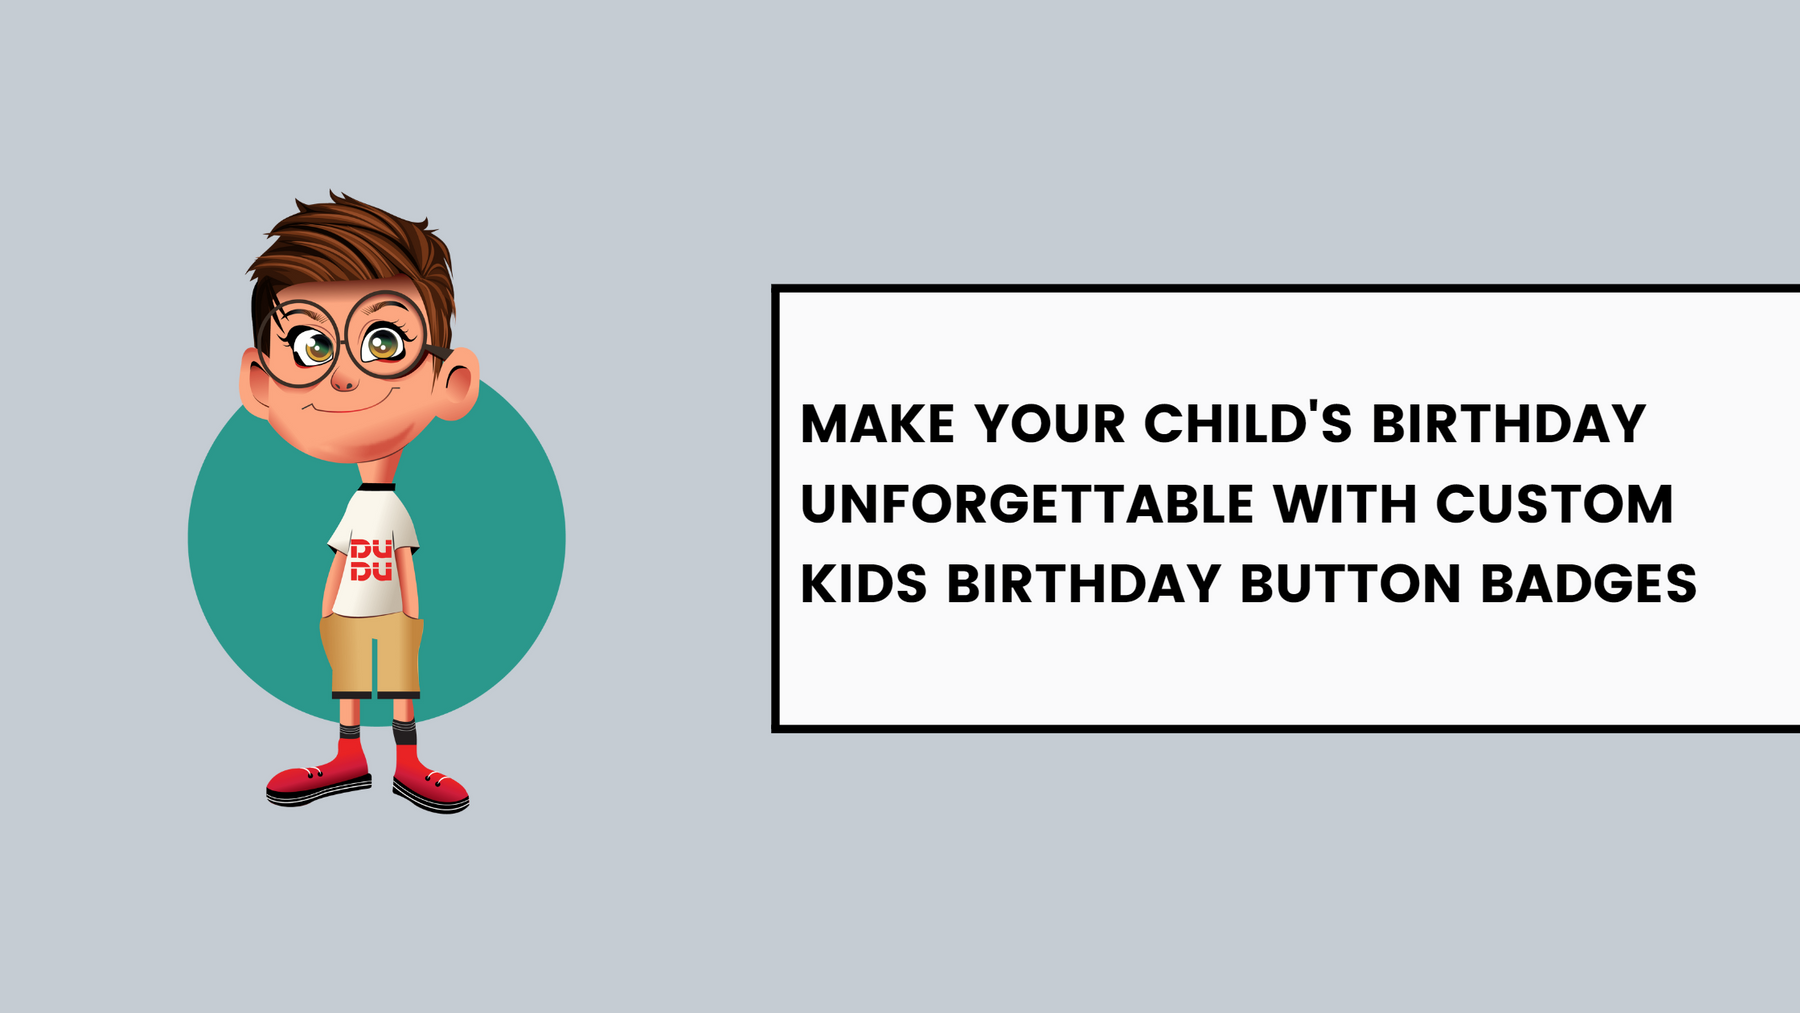 Make Your Child's Birthday Unforgettable with Custom Kids Birthday Button Badges